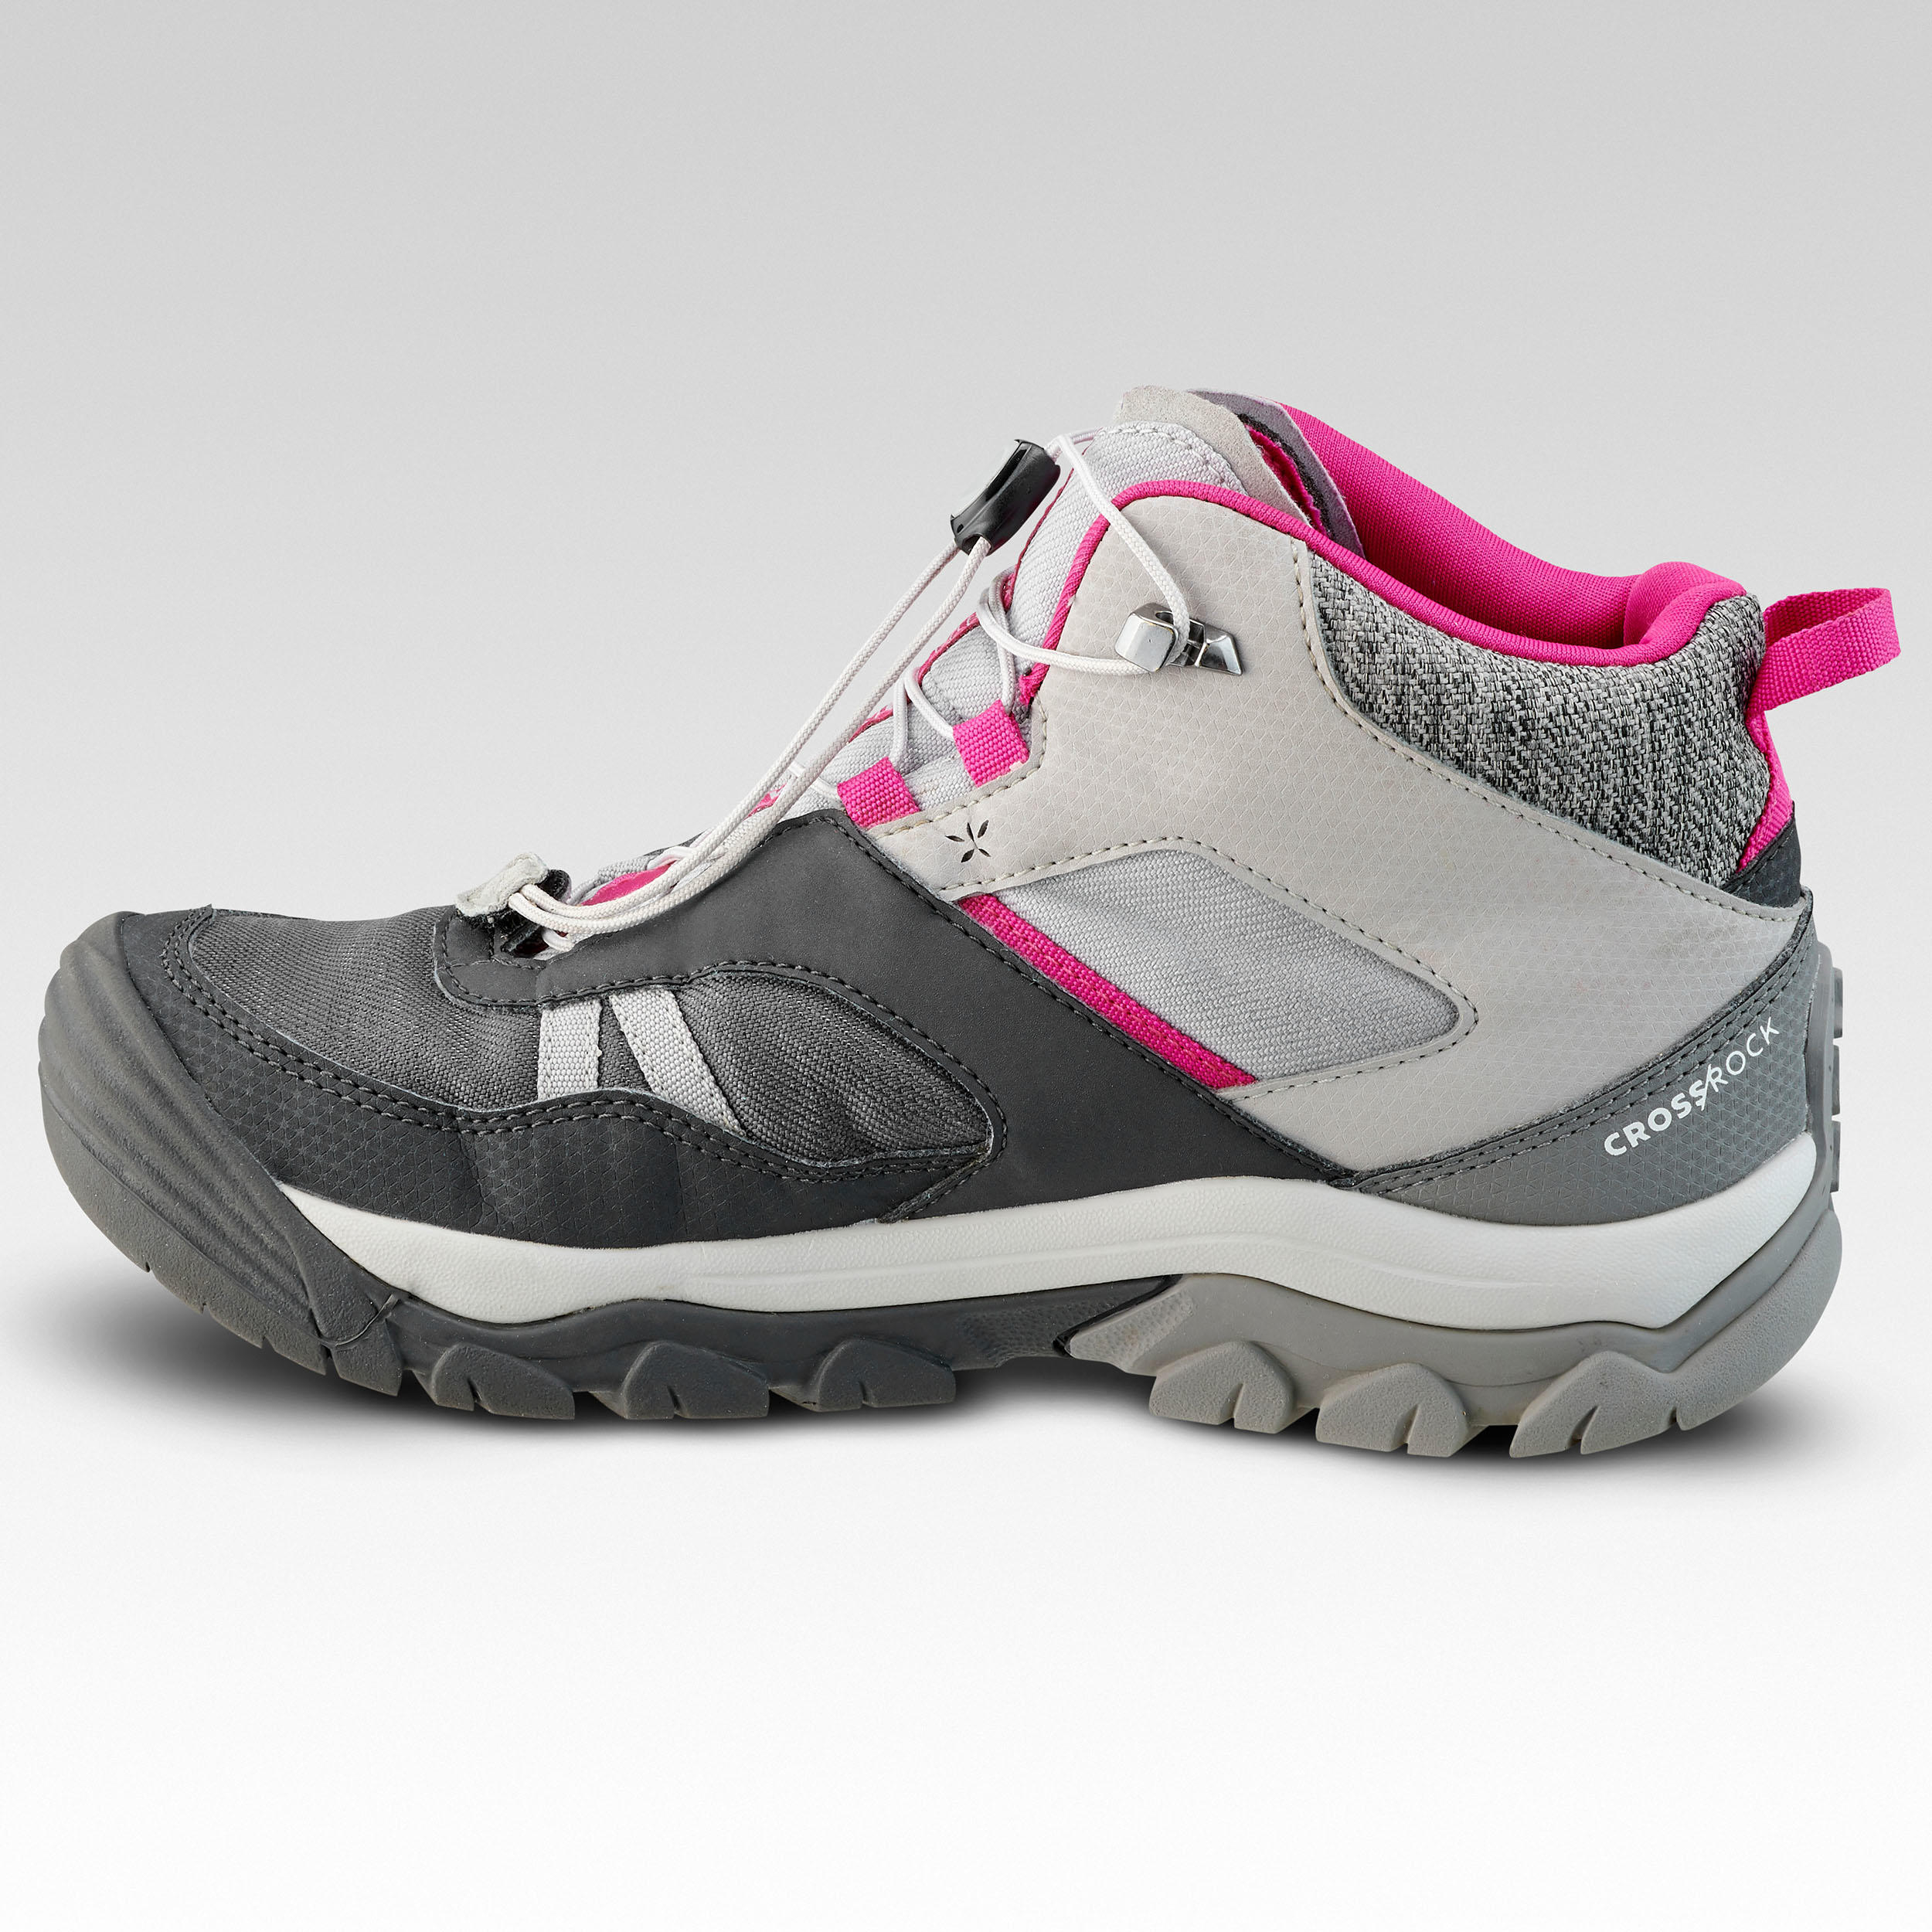 Children's waterproof lace-up walking shoes  CROSSROCK MID size 3-5 - Grey 4/9